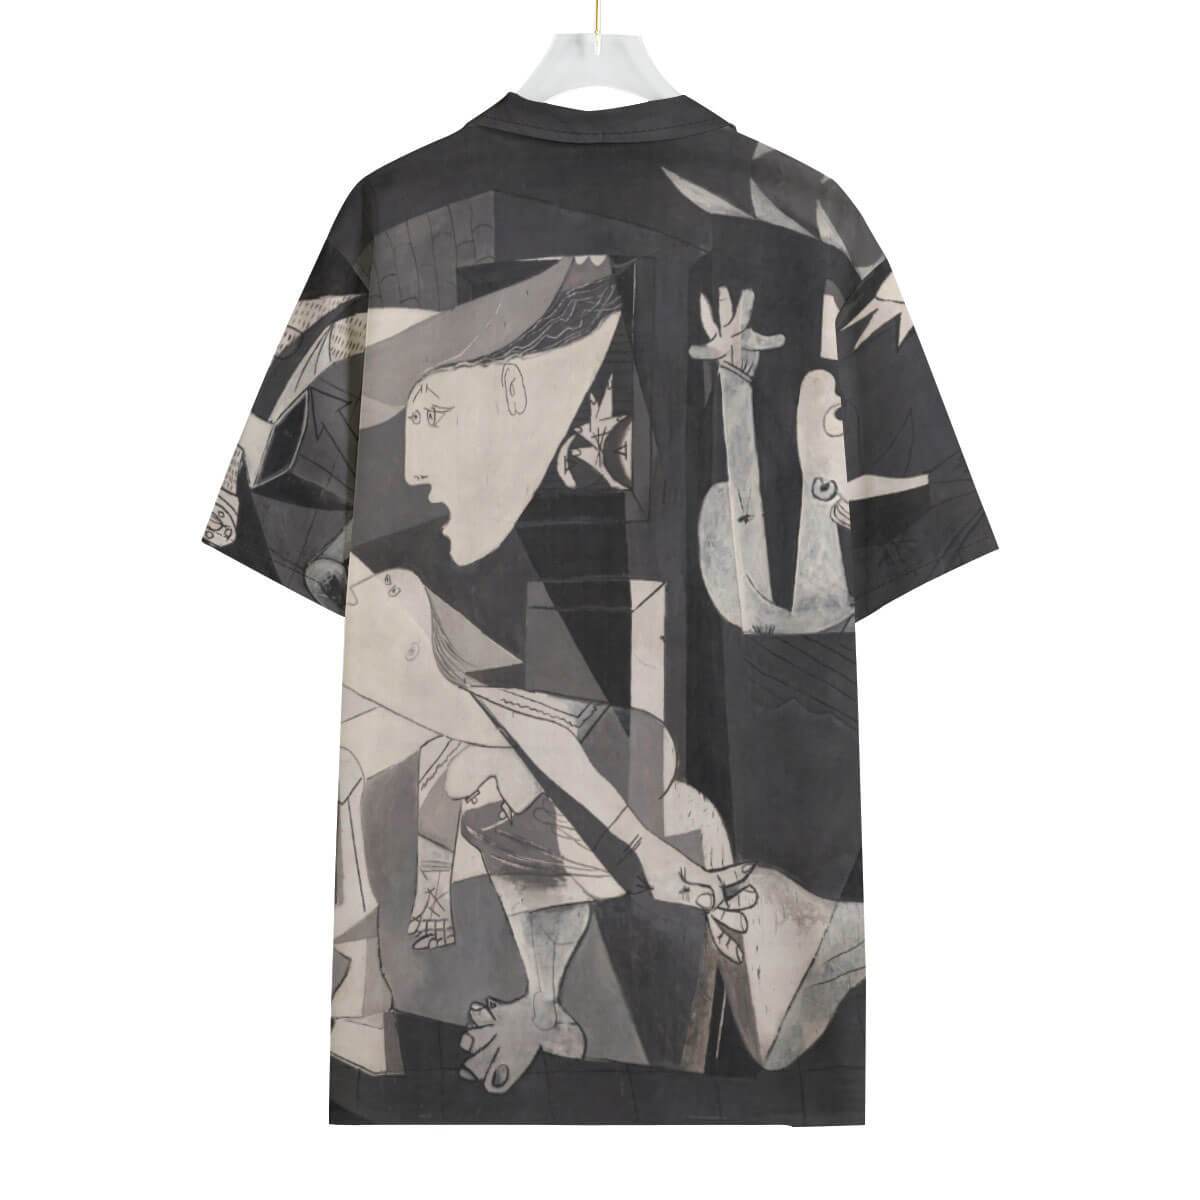 Art-inspired Hawaiian shirt featuring Picasso's Guernica